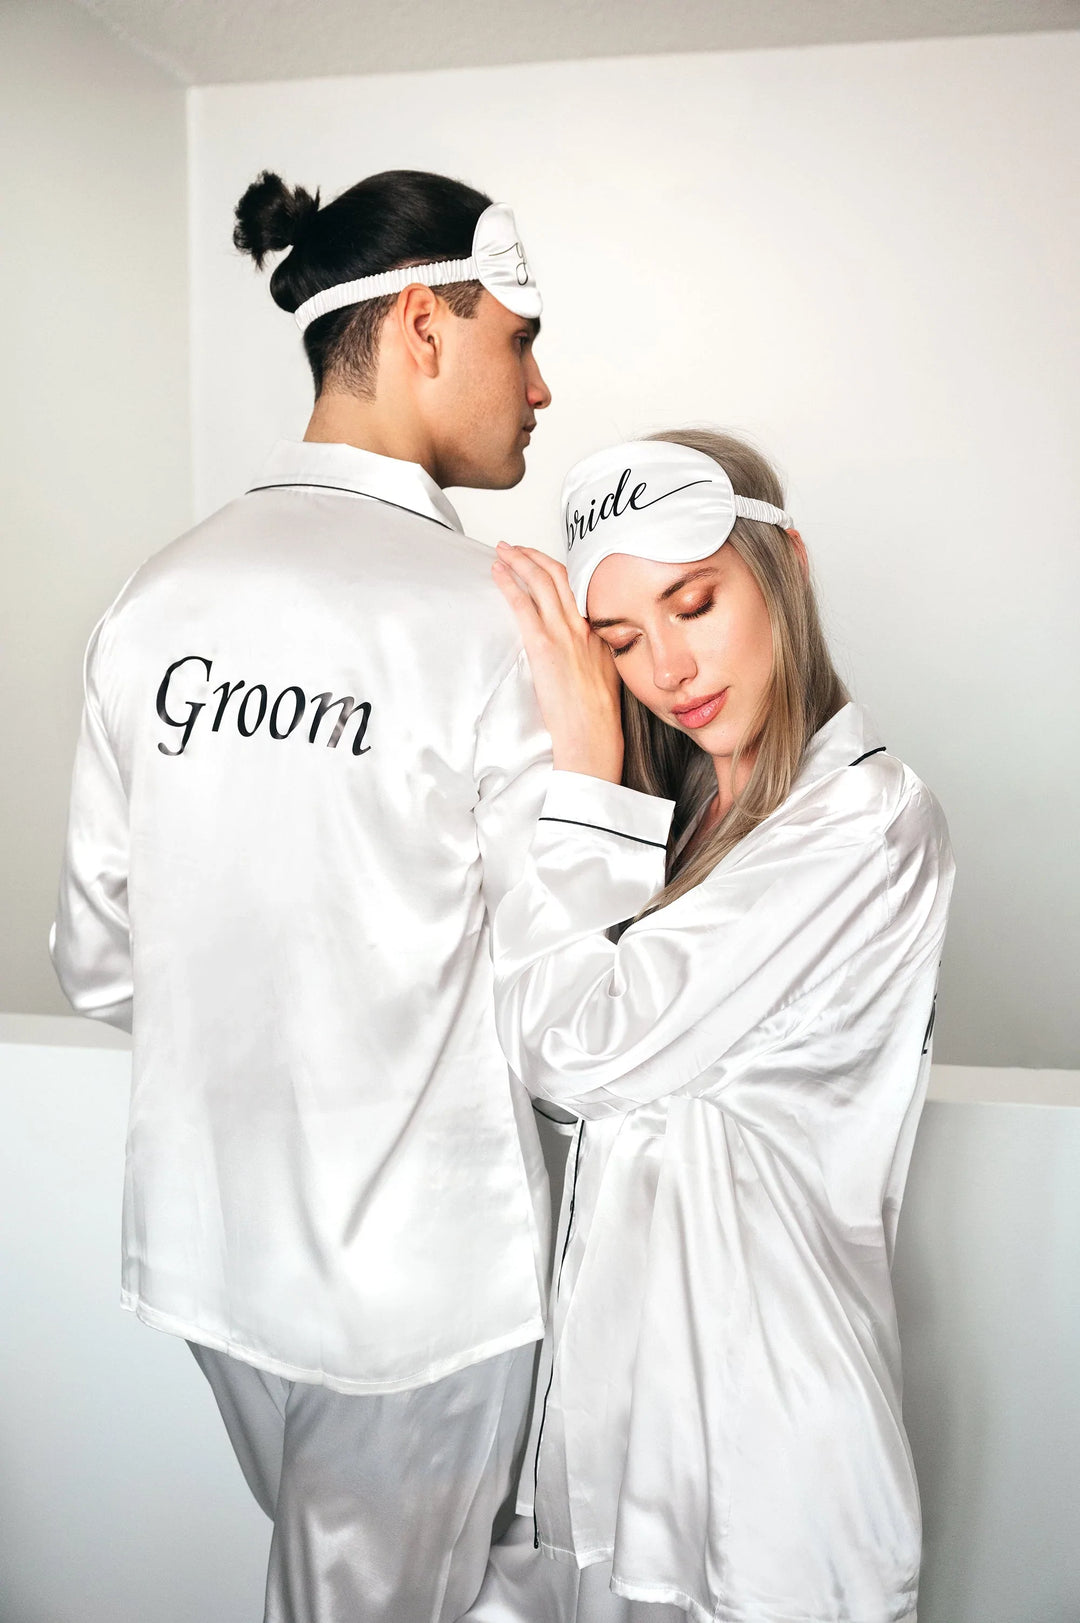 AW BRIDAL Matching Pajamas for Couples, Long Sleeve and Pants